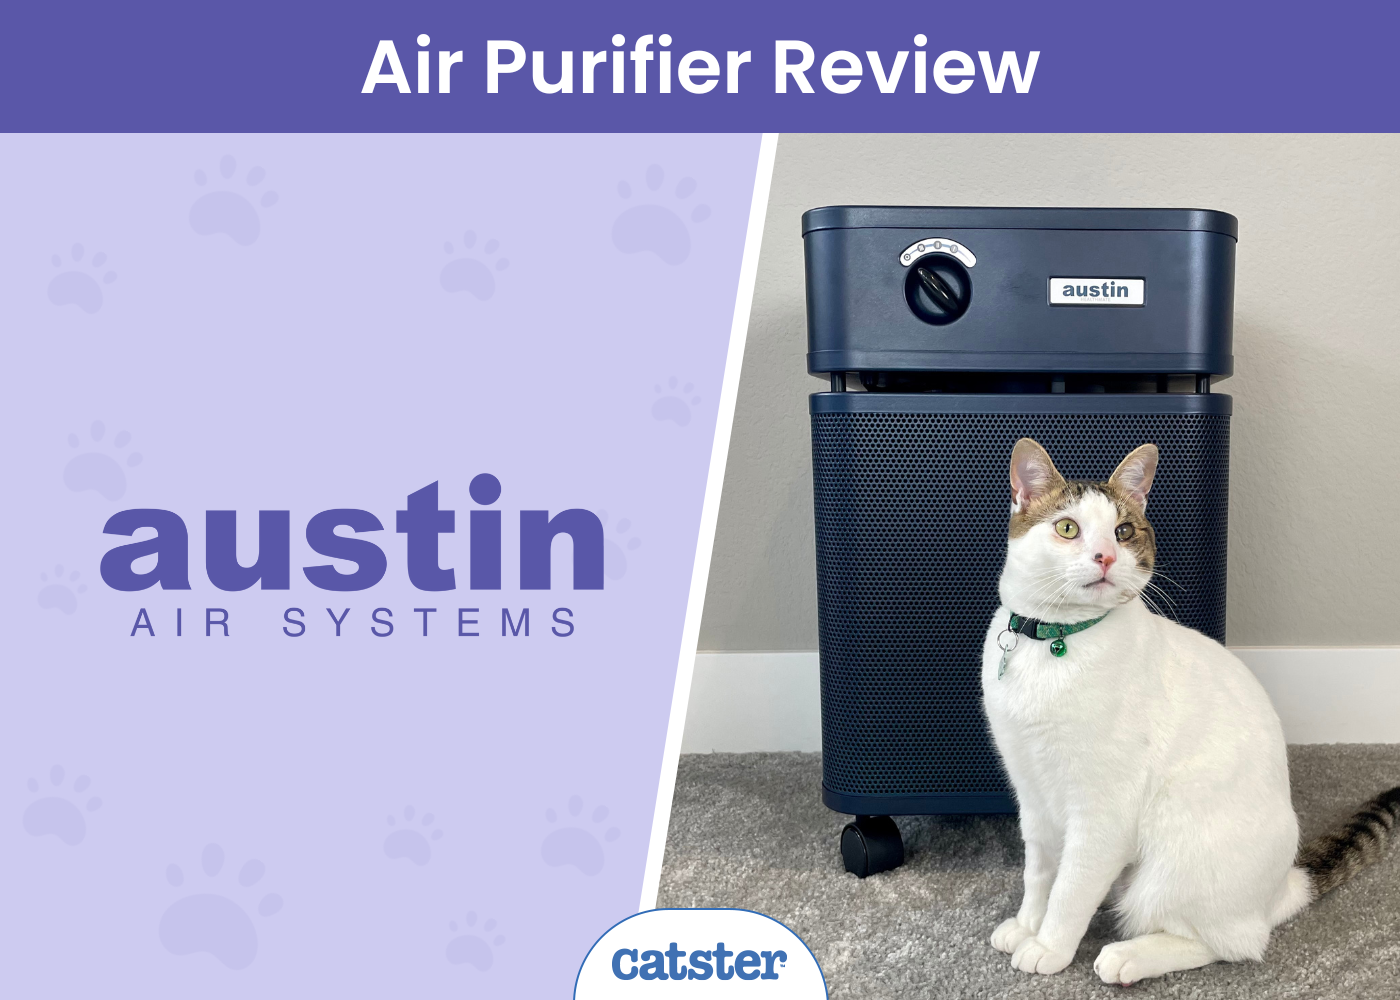 CAT_SAPR_AustinAir Purifier